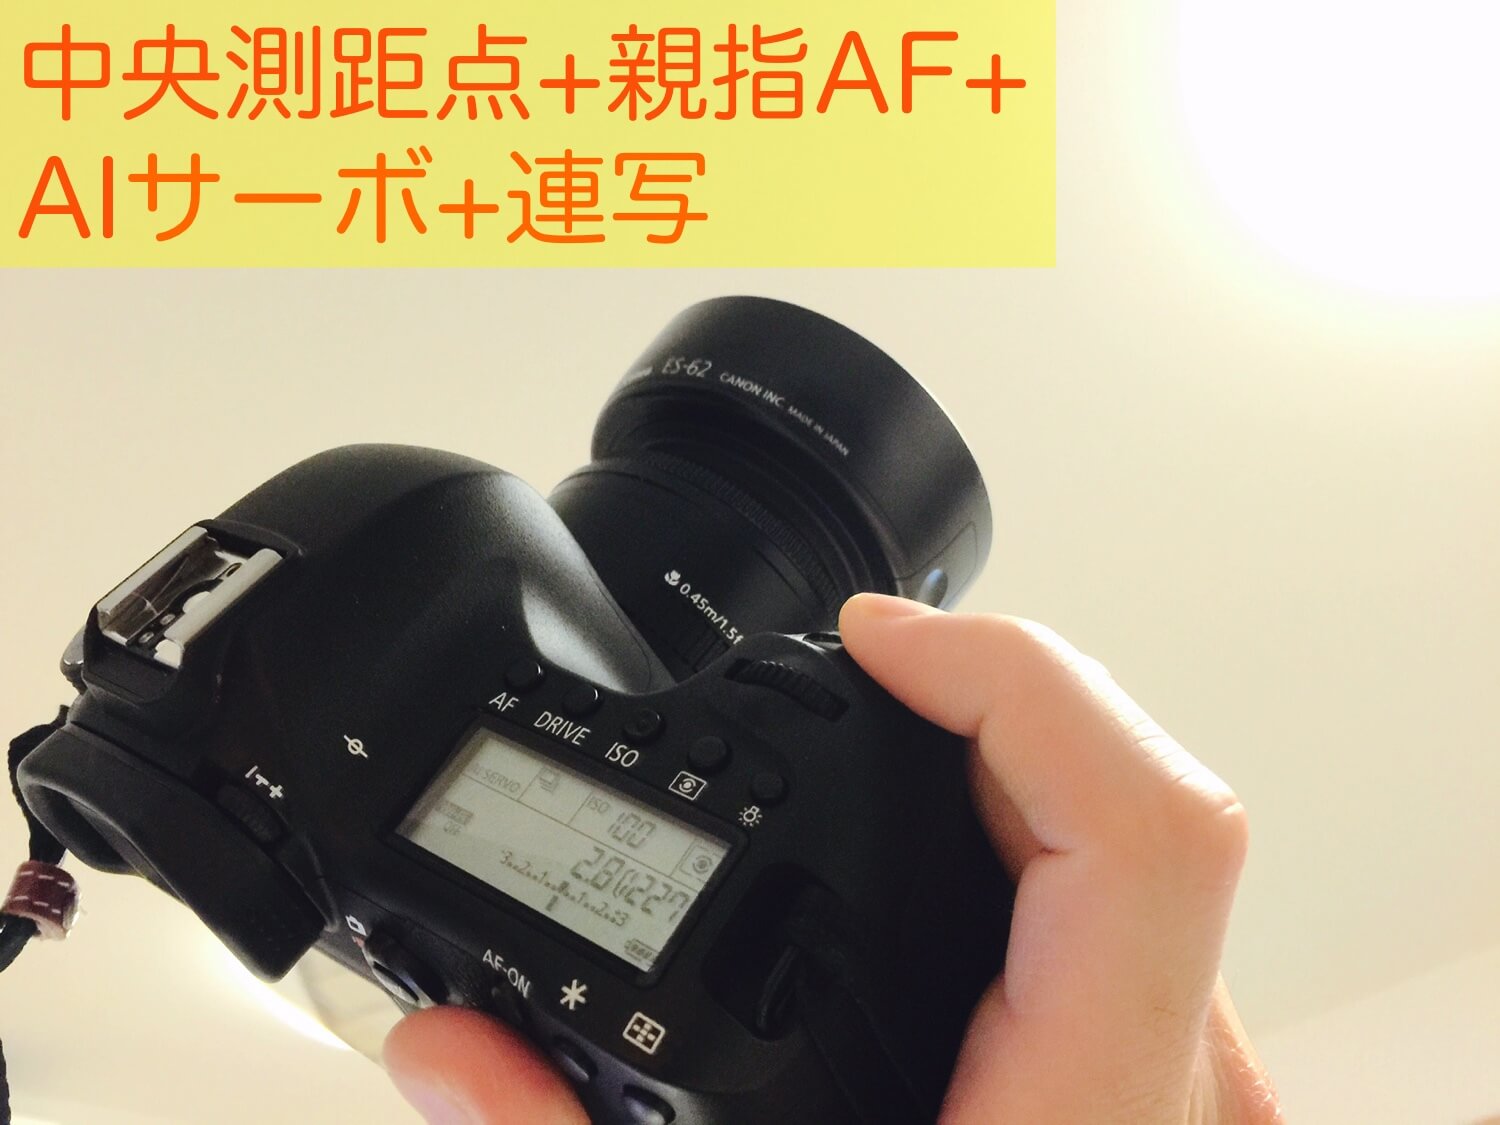 AFセンサーがエントリークラスのカメラは中央測距点+親指AF+AIサーボ+連写モードで劇的に撮影の利便性が上がる